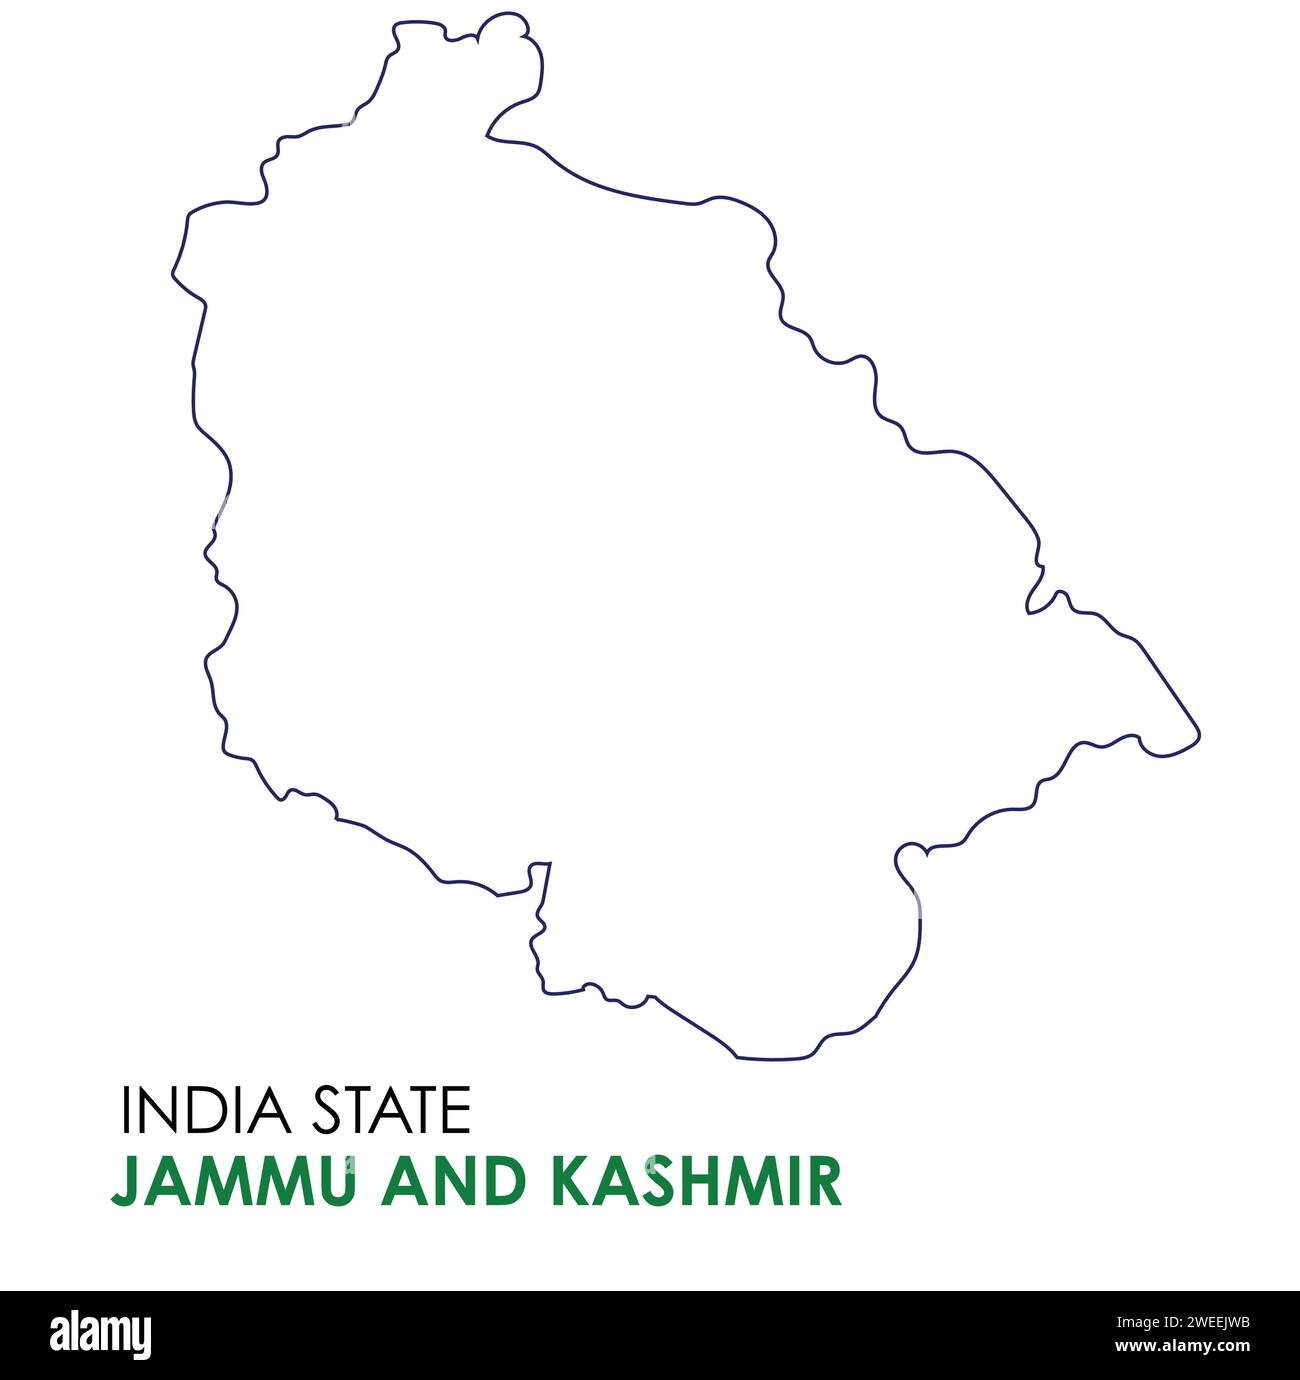 Jammu and kashmir map of Indian state. Jammu and kashmir map vector illustration. Stock Vector